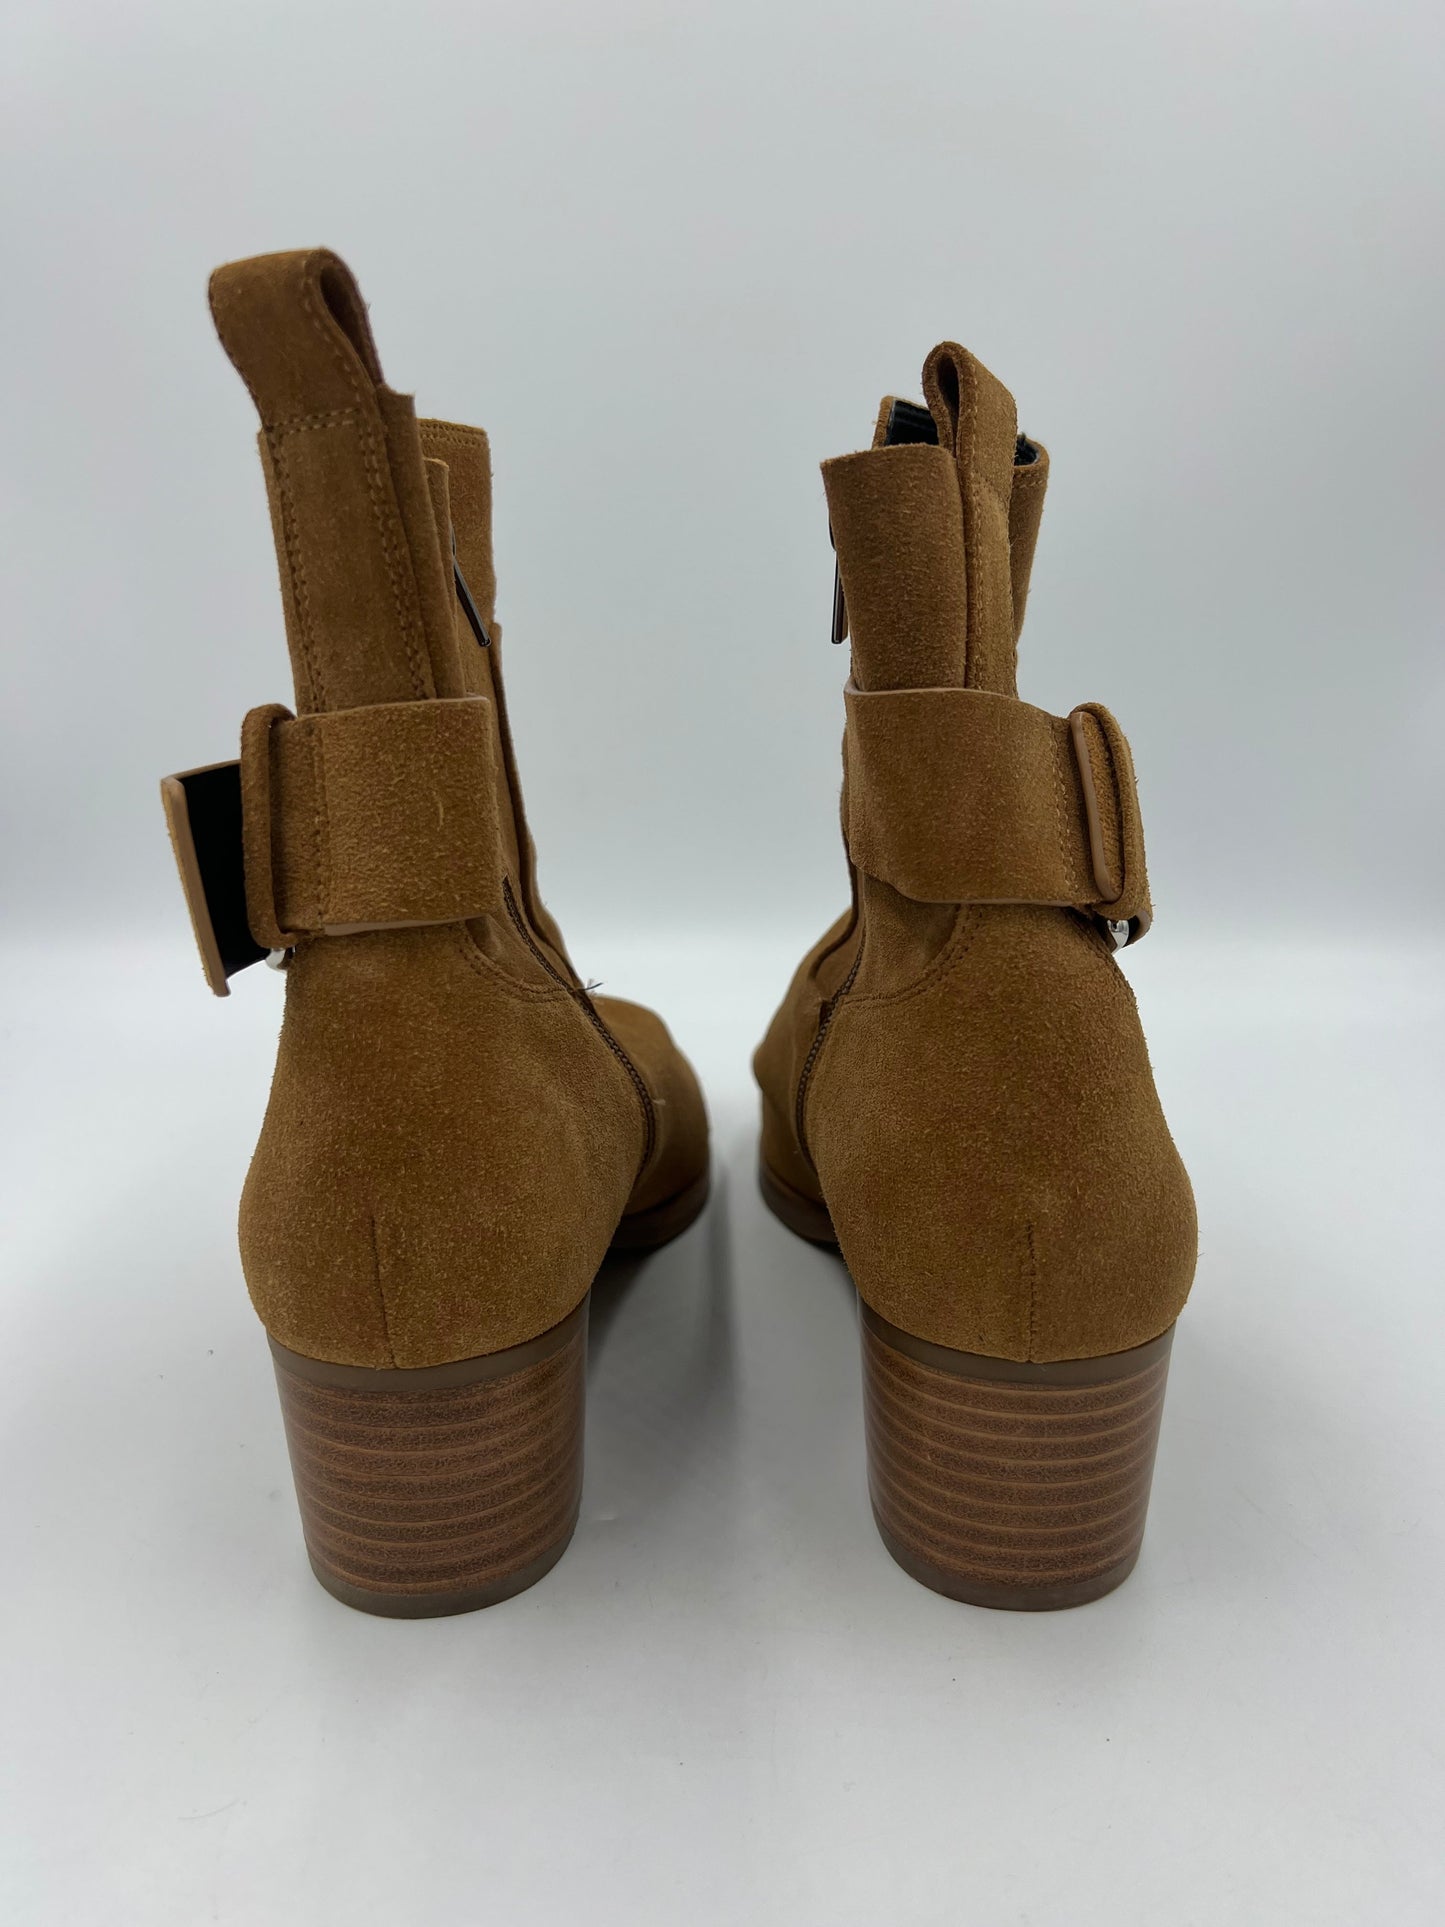 Boots Designer By Via Spiga  Size: 7